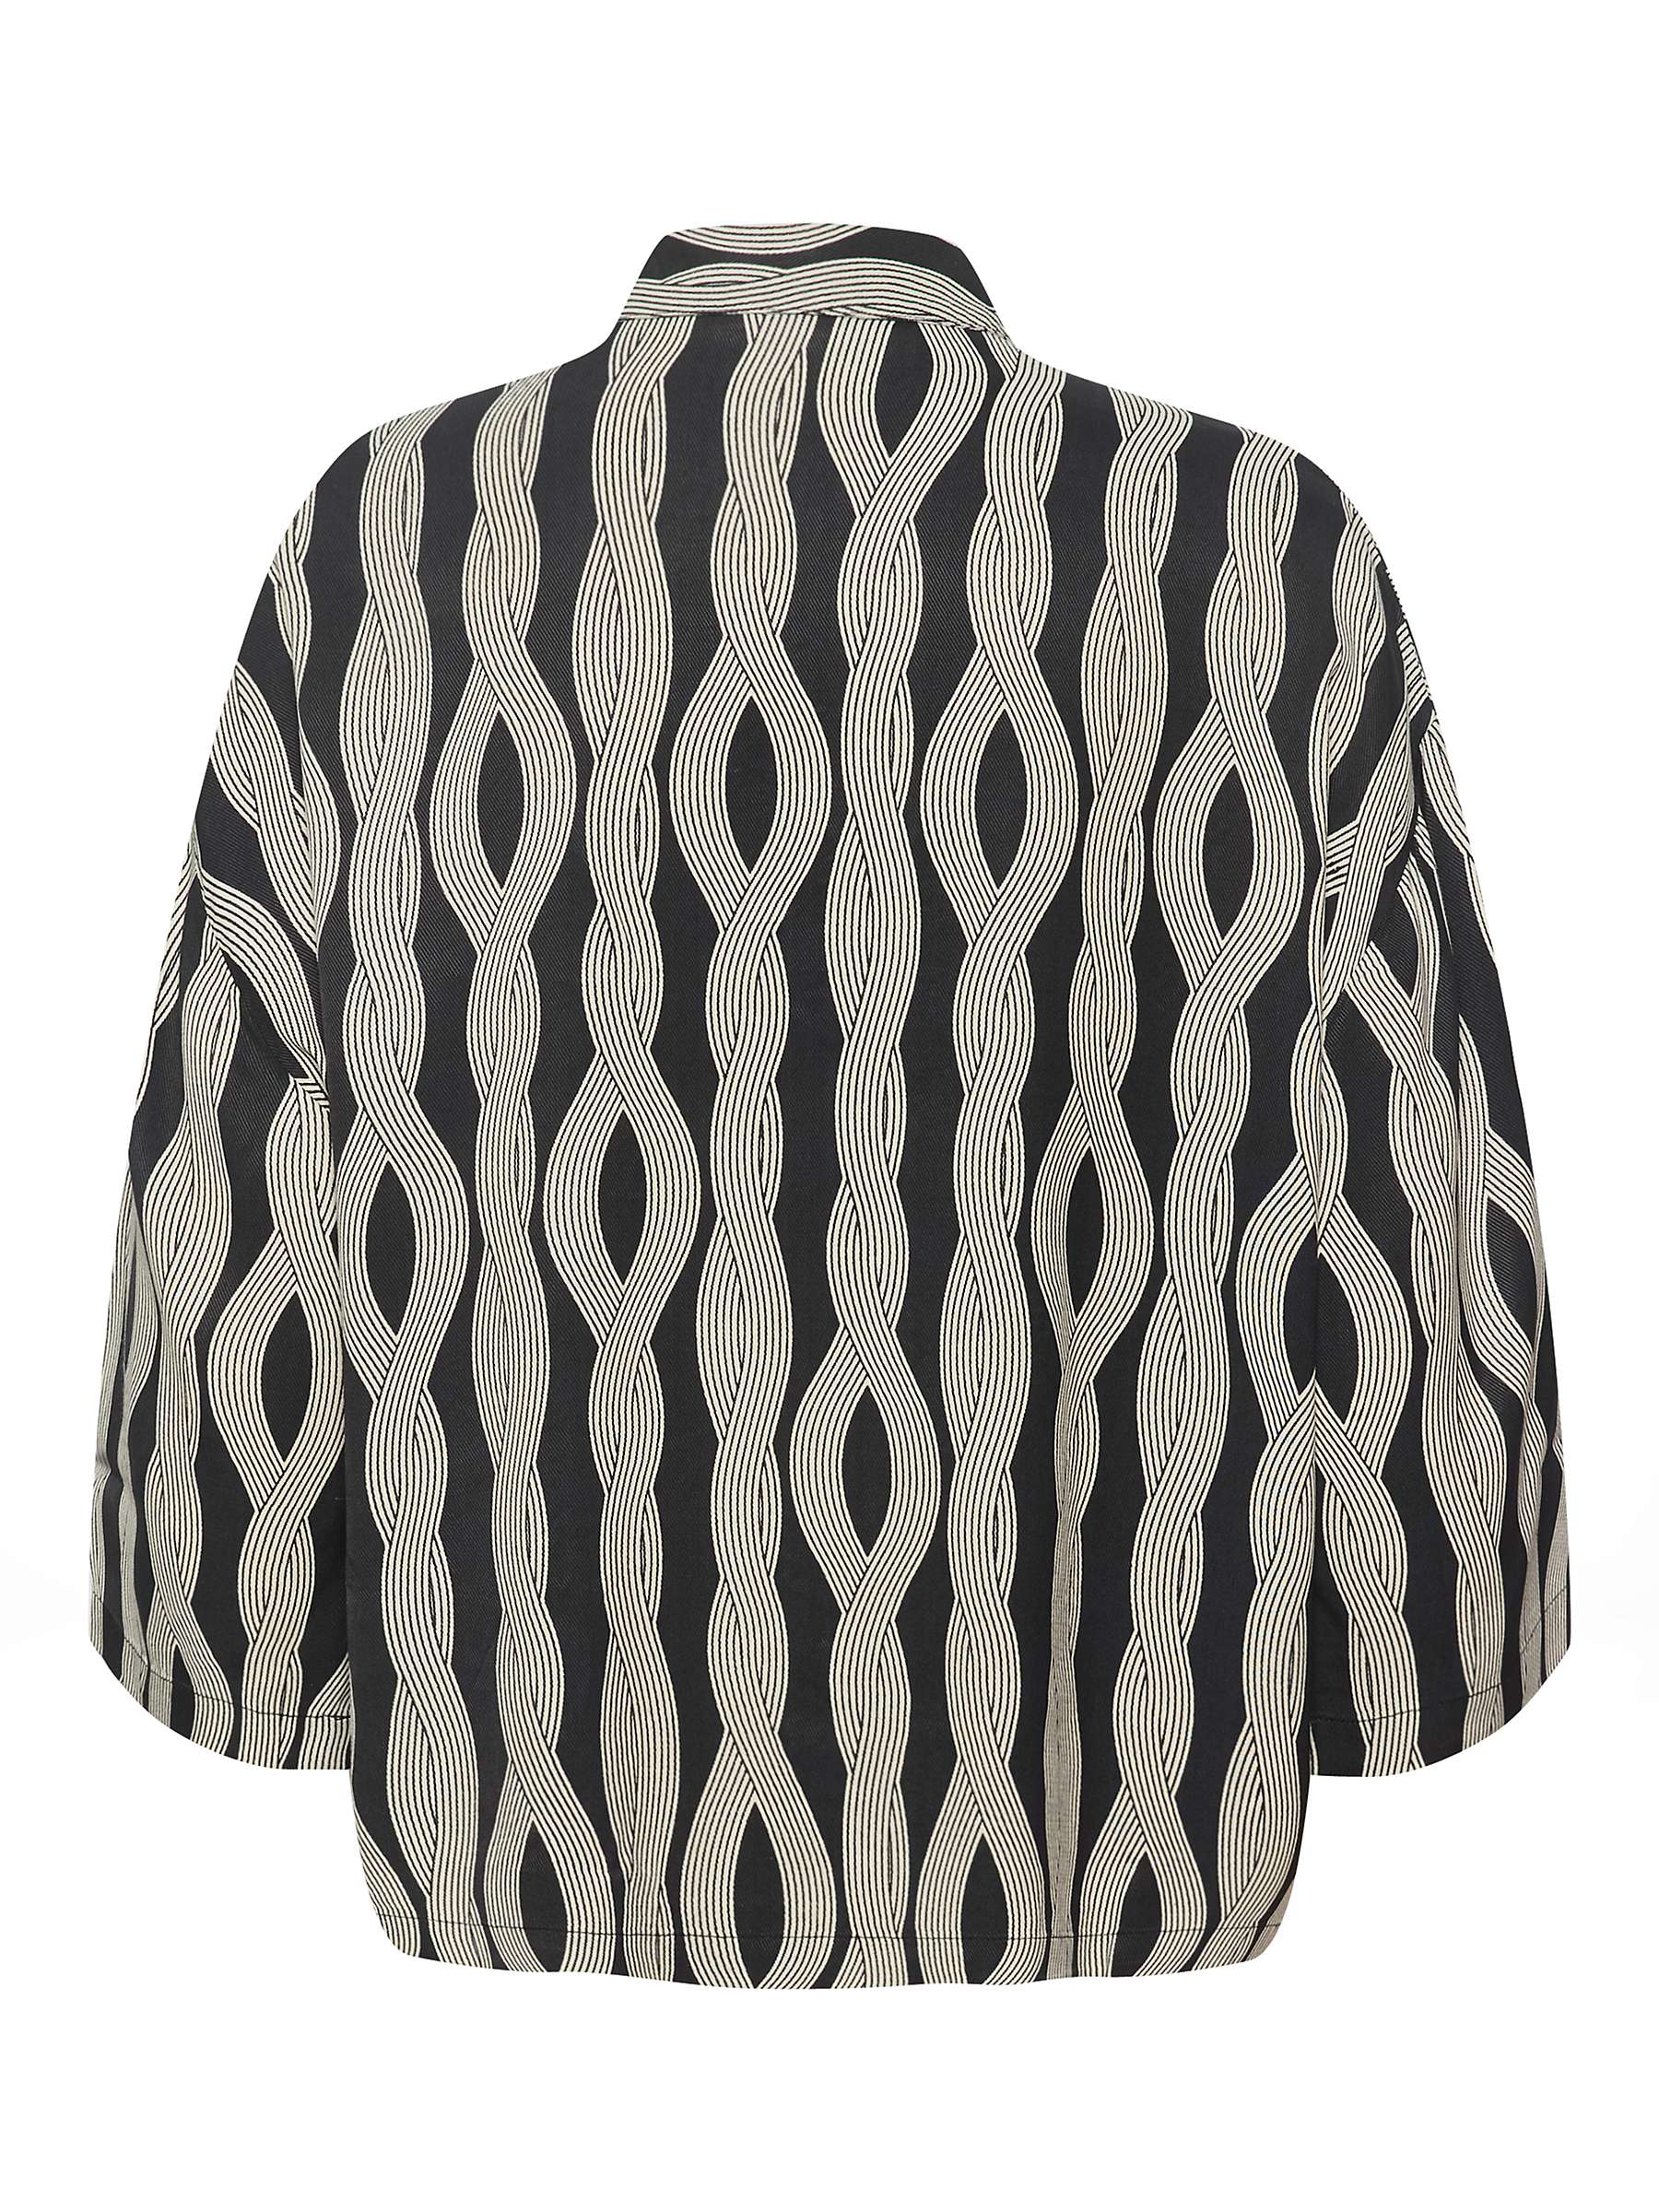 Buy KAFFE Carlbie Ecovero Casual Fit 3/4 Sleeve Shirt, Black Online at johnlewis.com